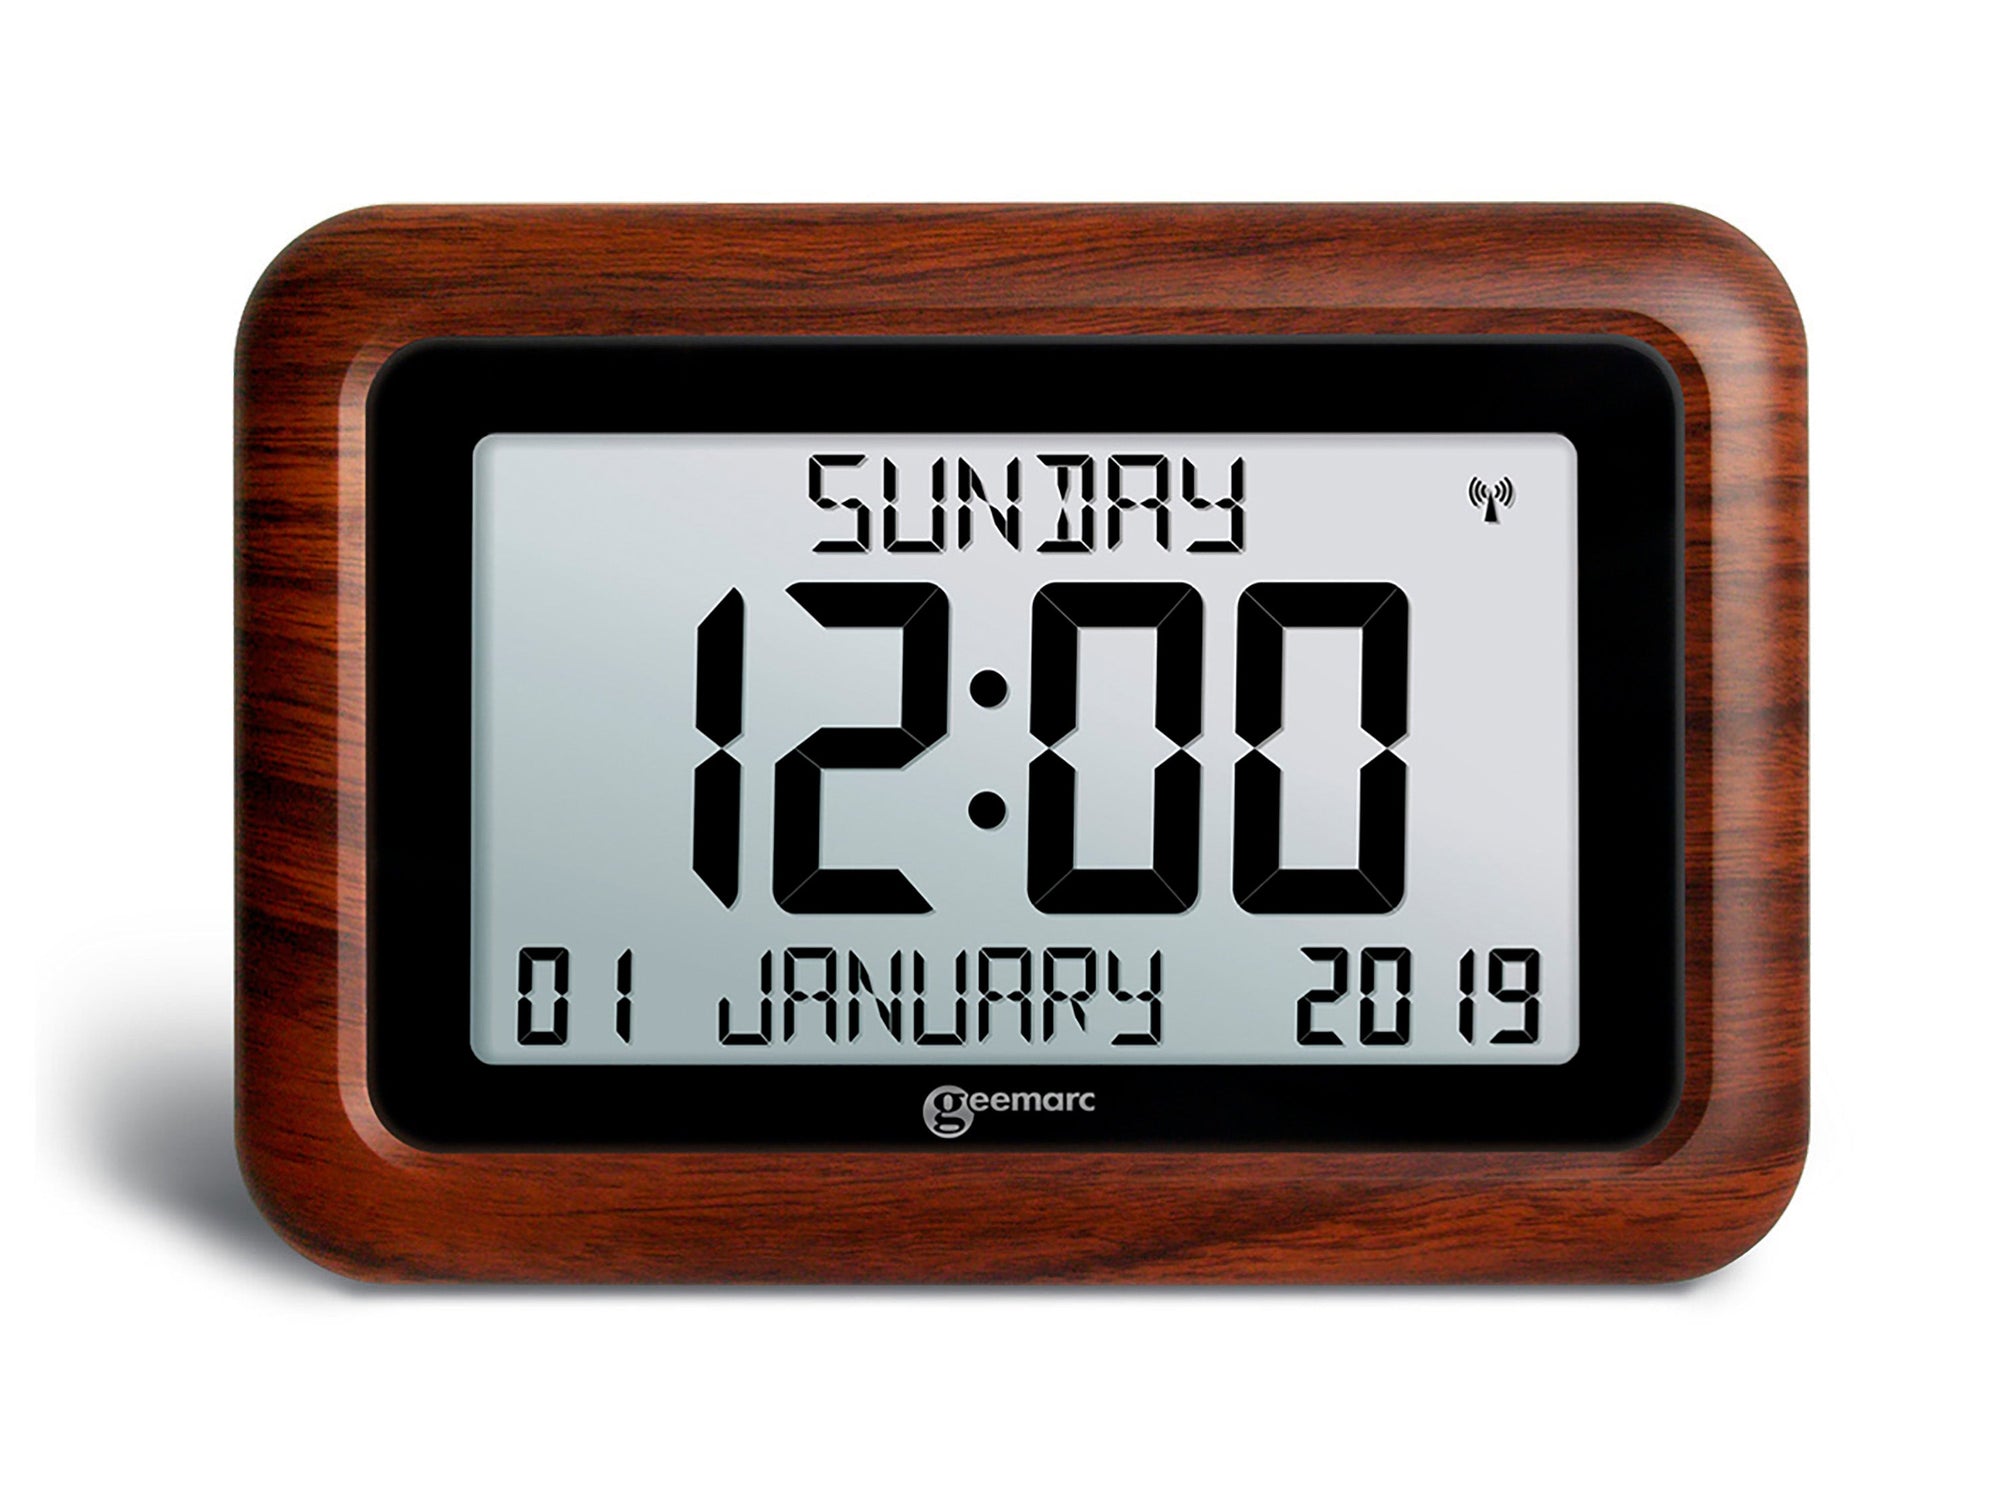 Radio controlled wood effect clock - VAT free